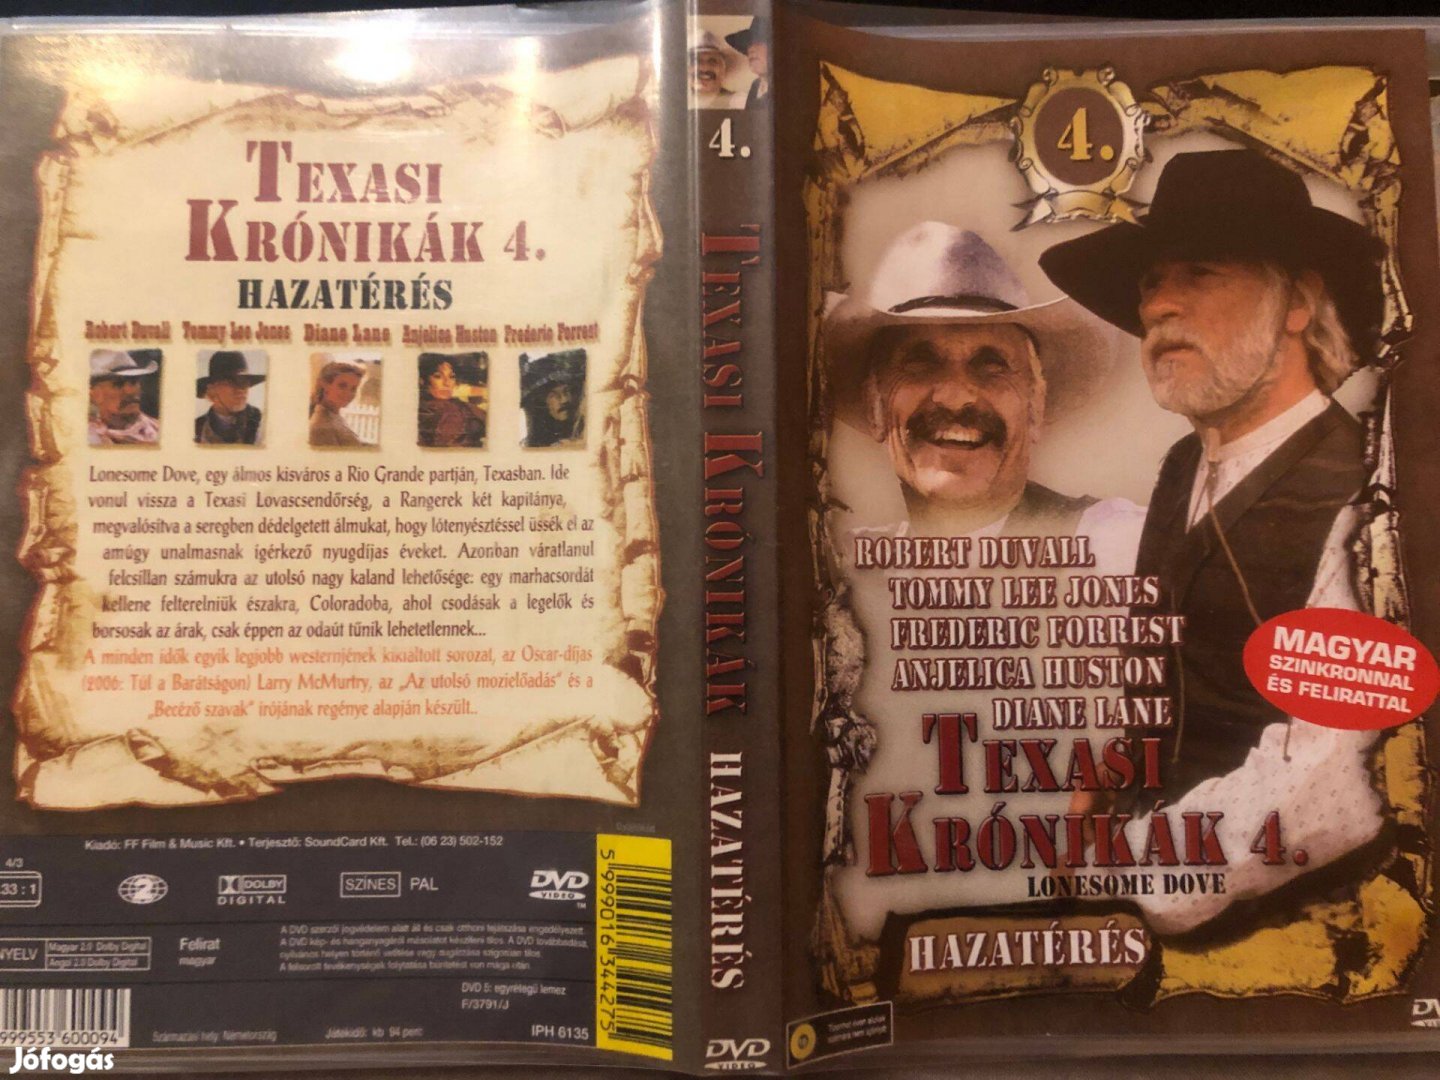 Texasi krónikák 3db dvd (karcmentes, Robert Duvall) DVD